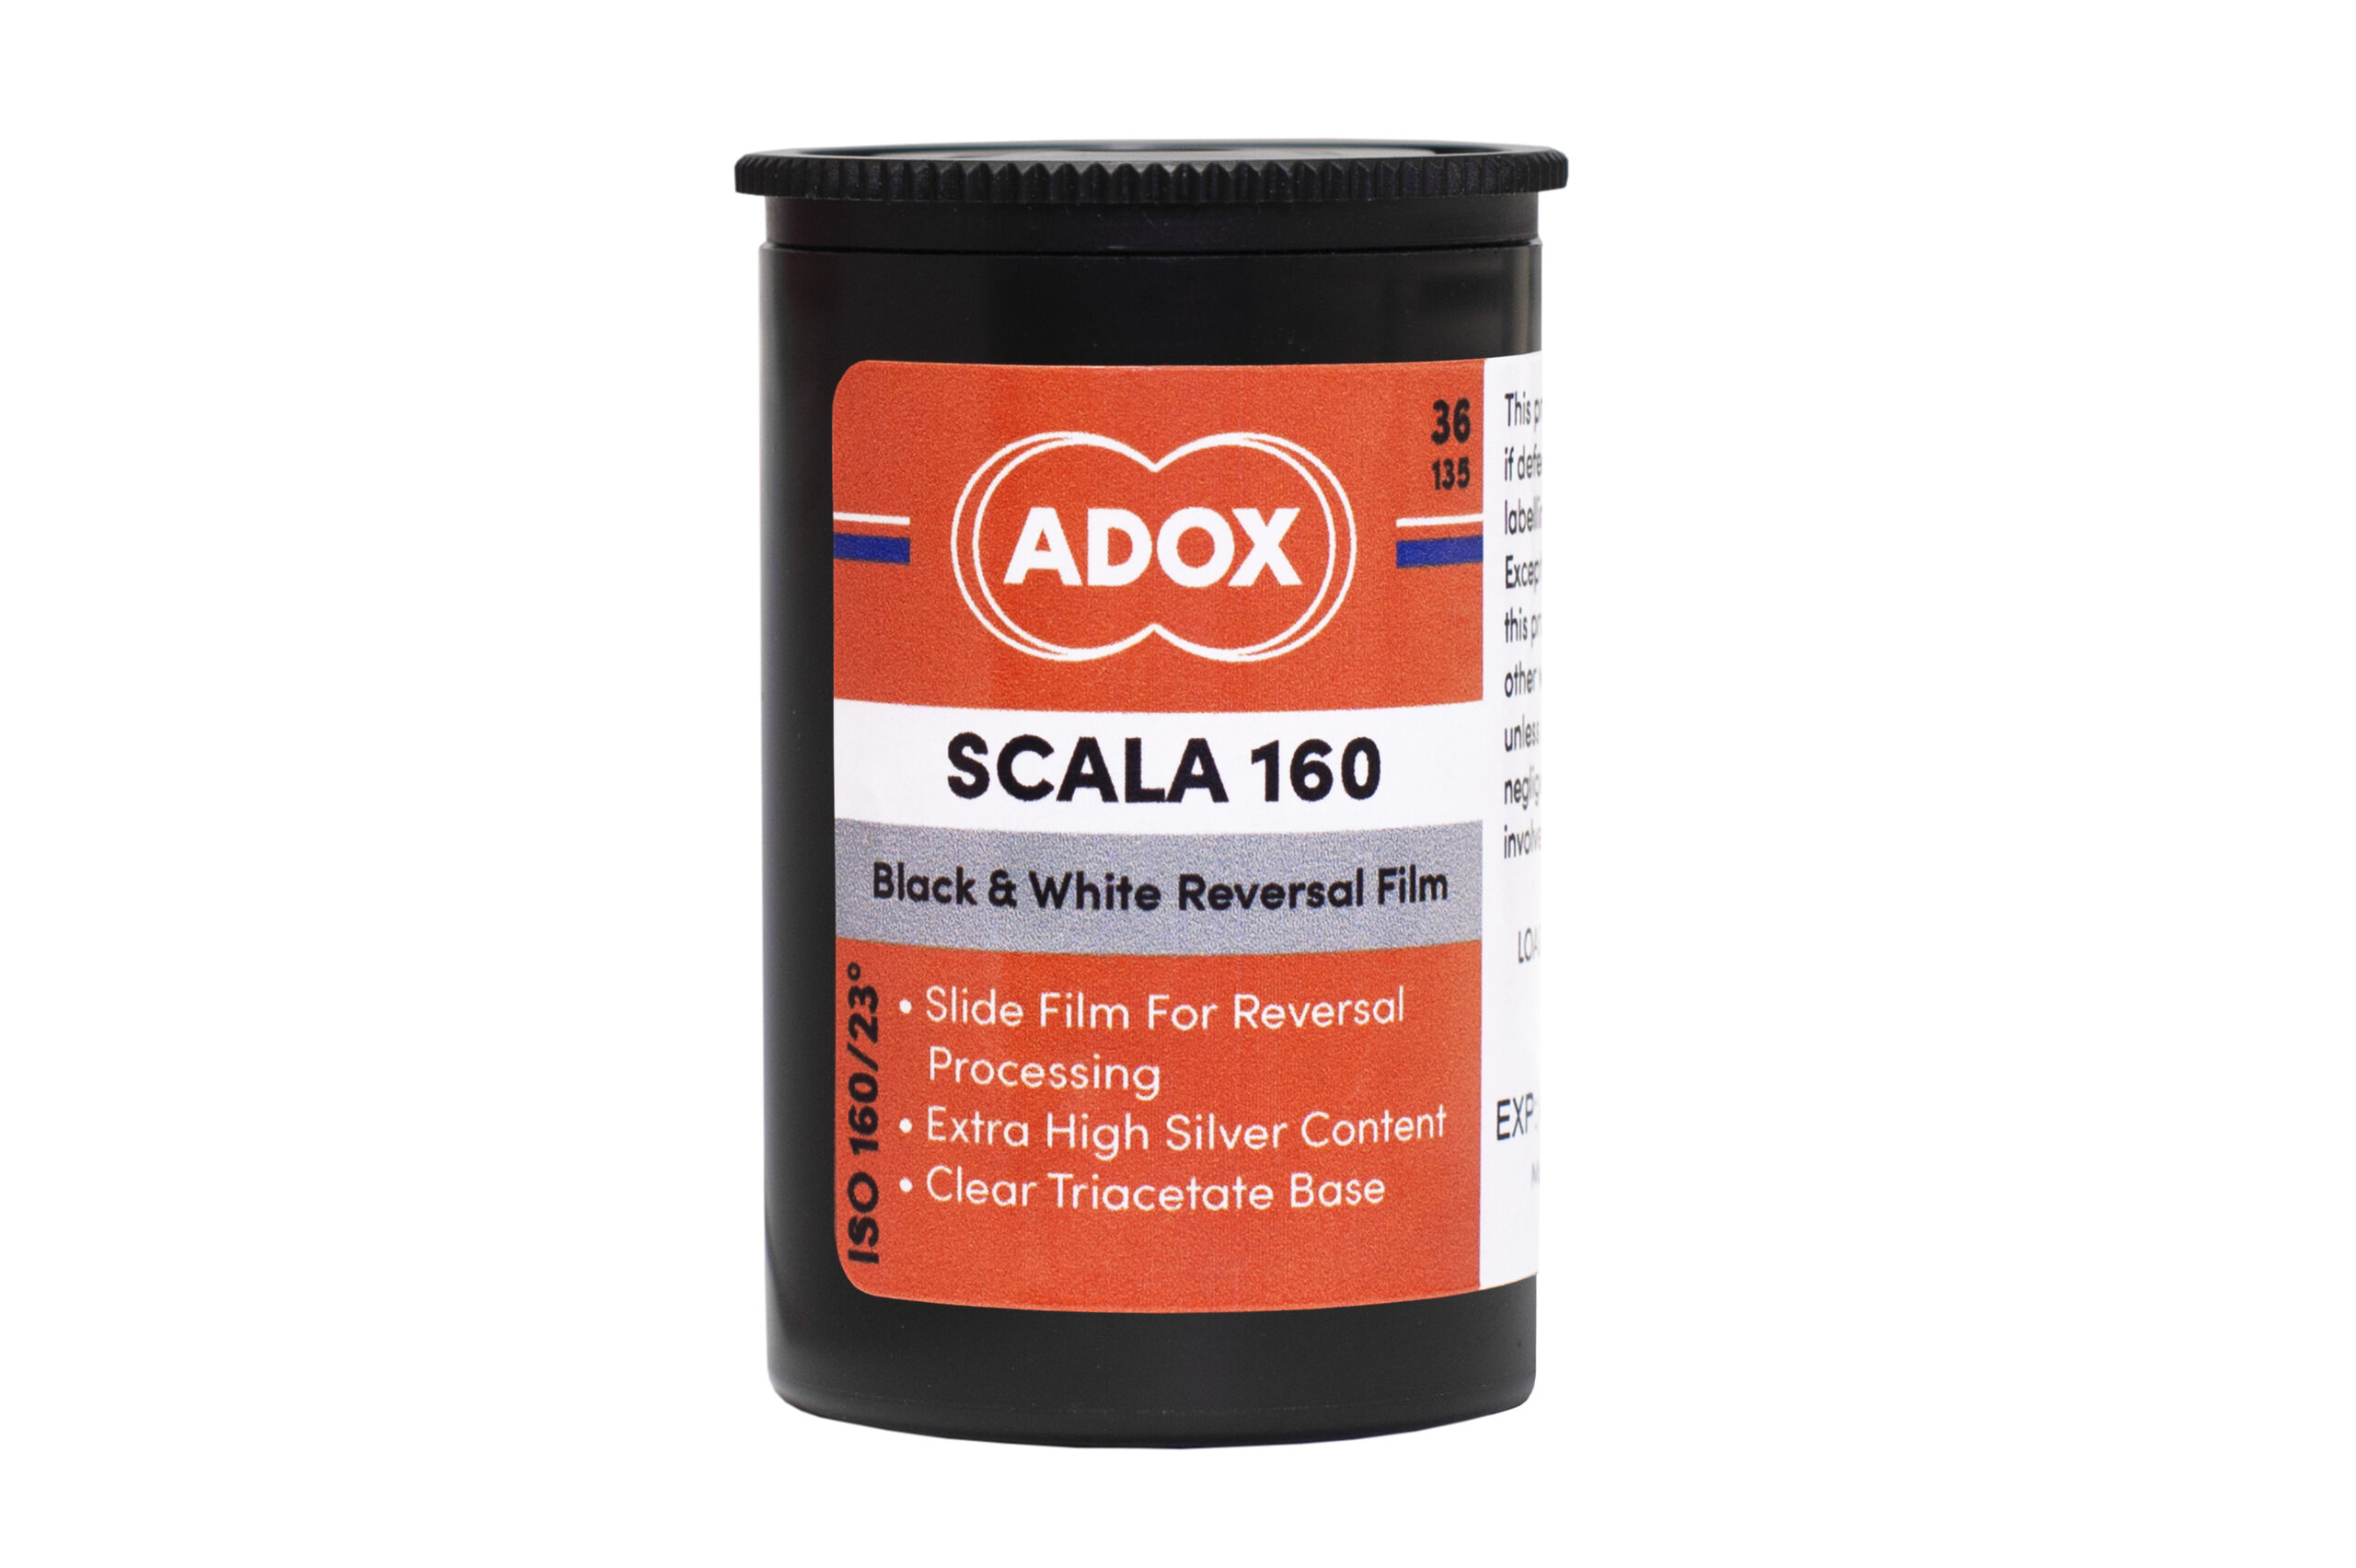 一卷Adox Scala胶卷。